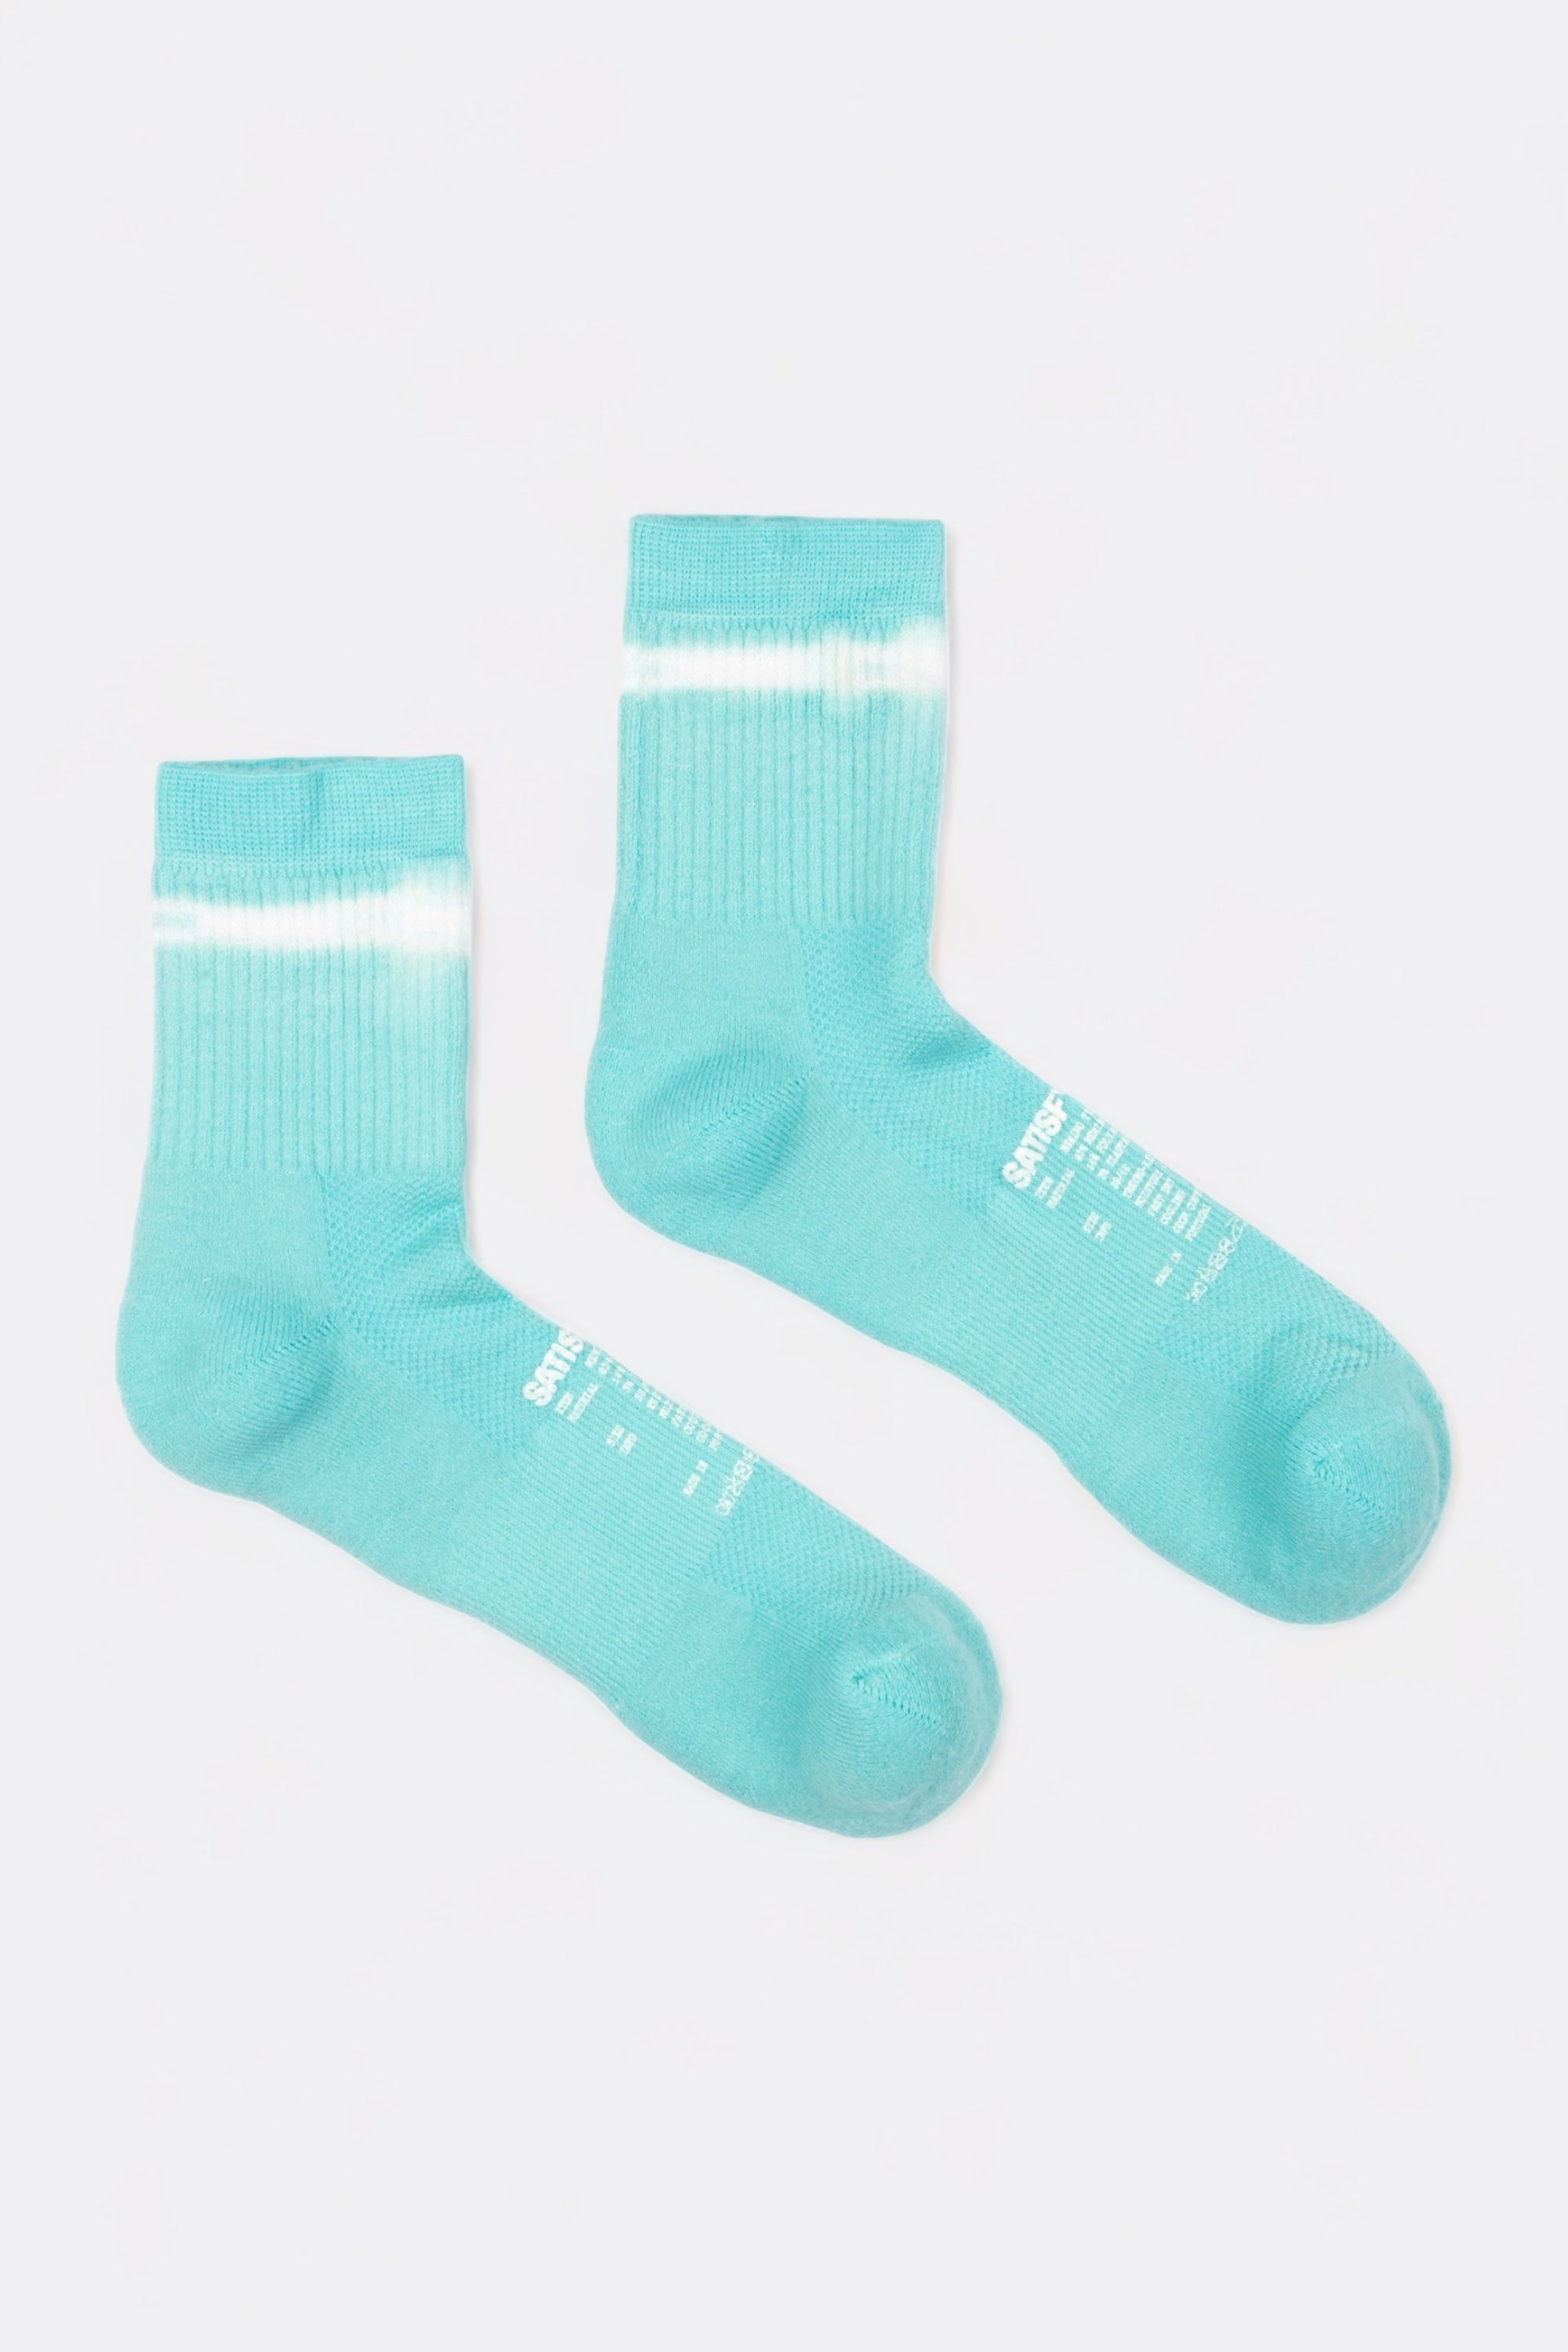 Satisfy - Merino Tube Socks (Yucca Tie-Dye)